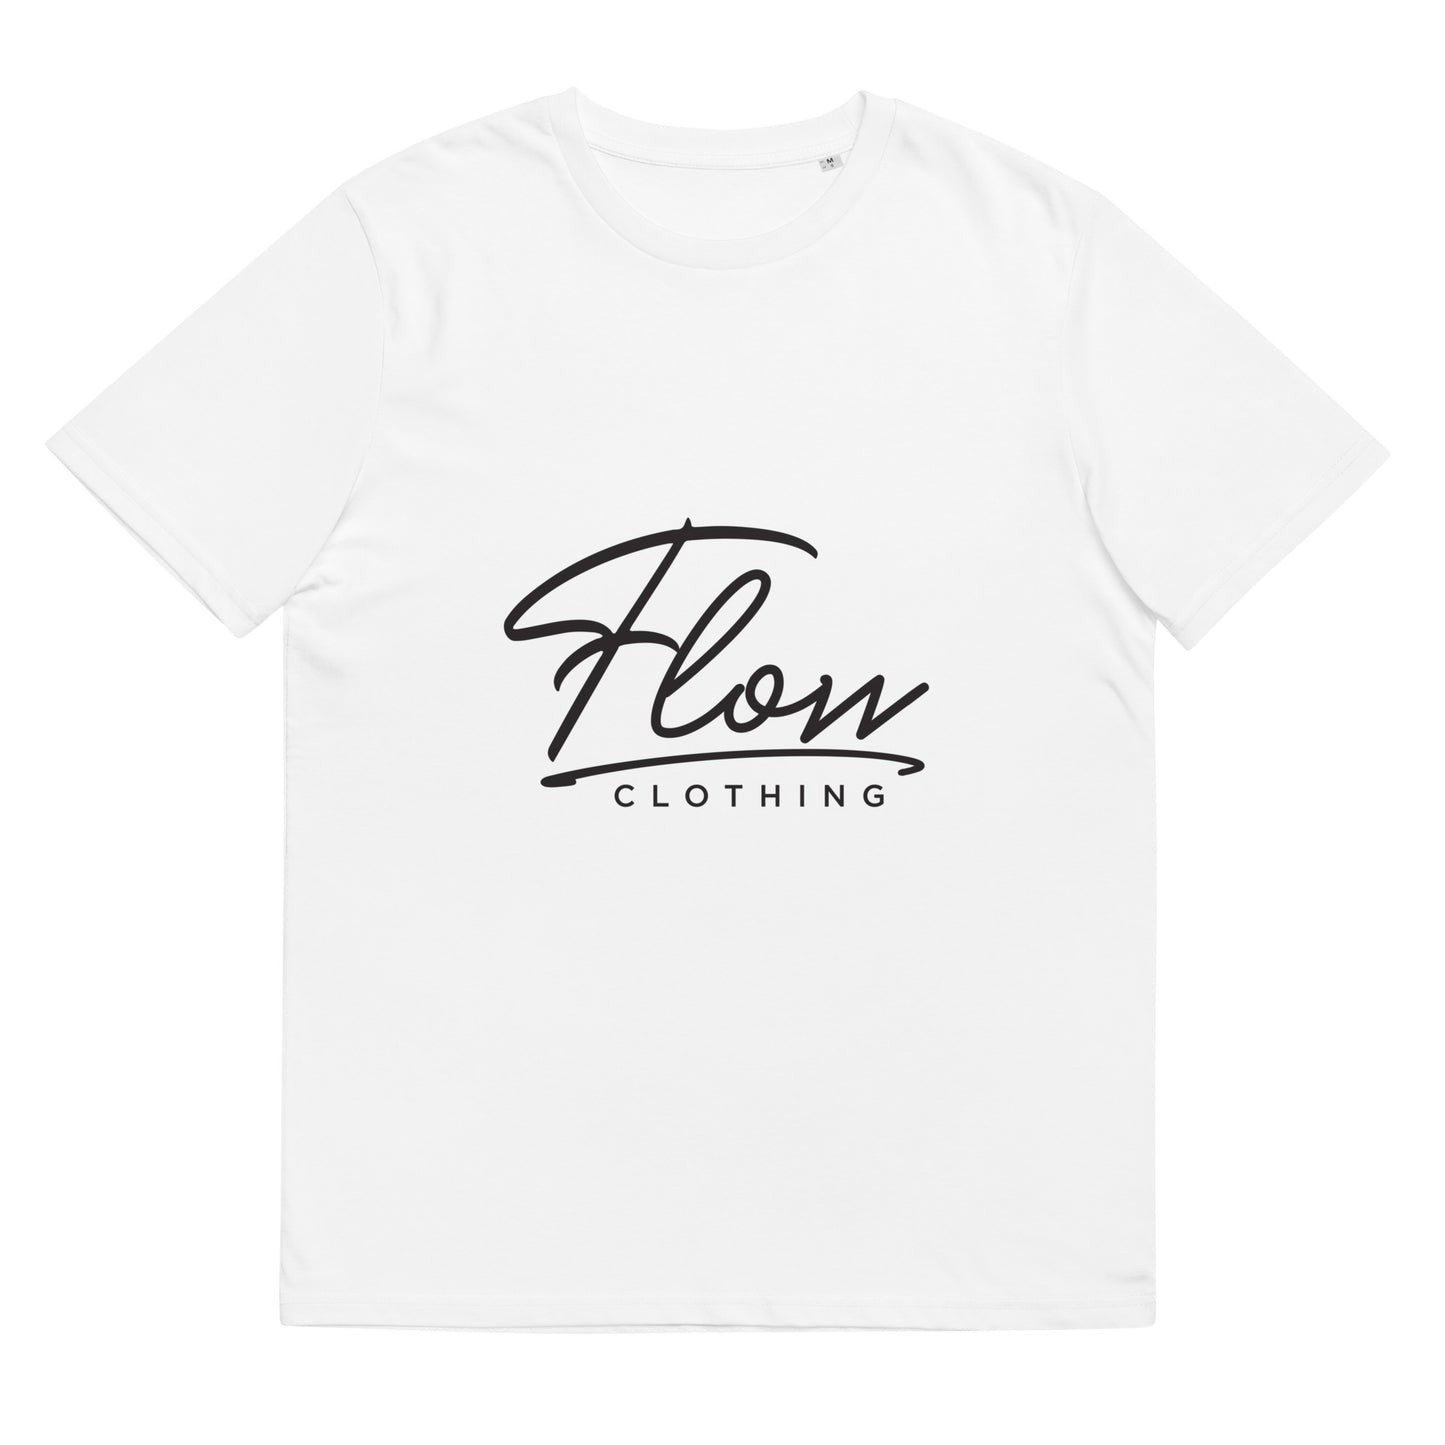 White "Flow" t-shirt